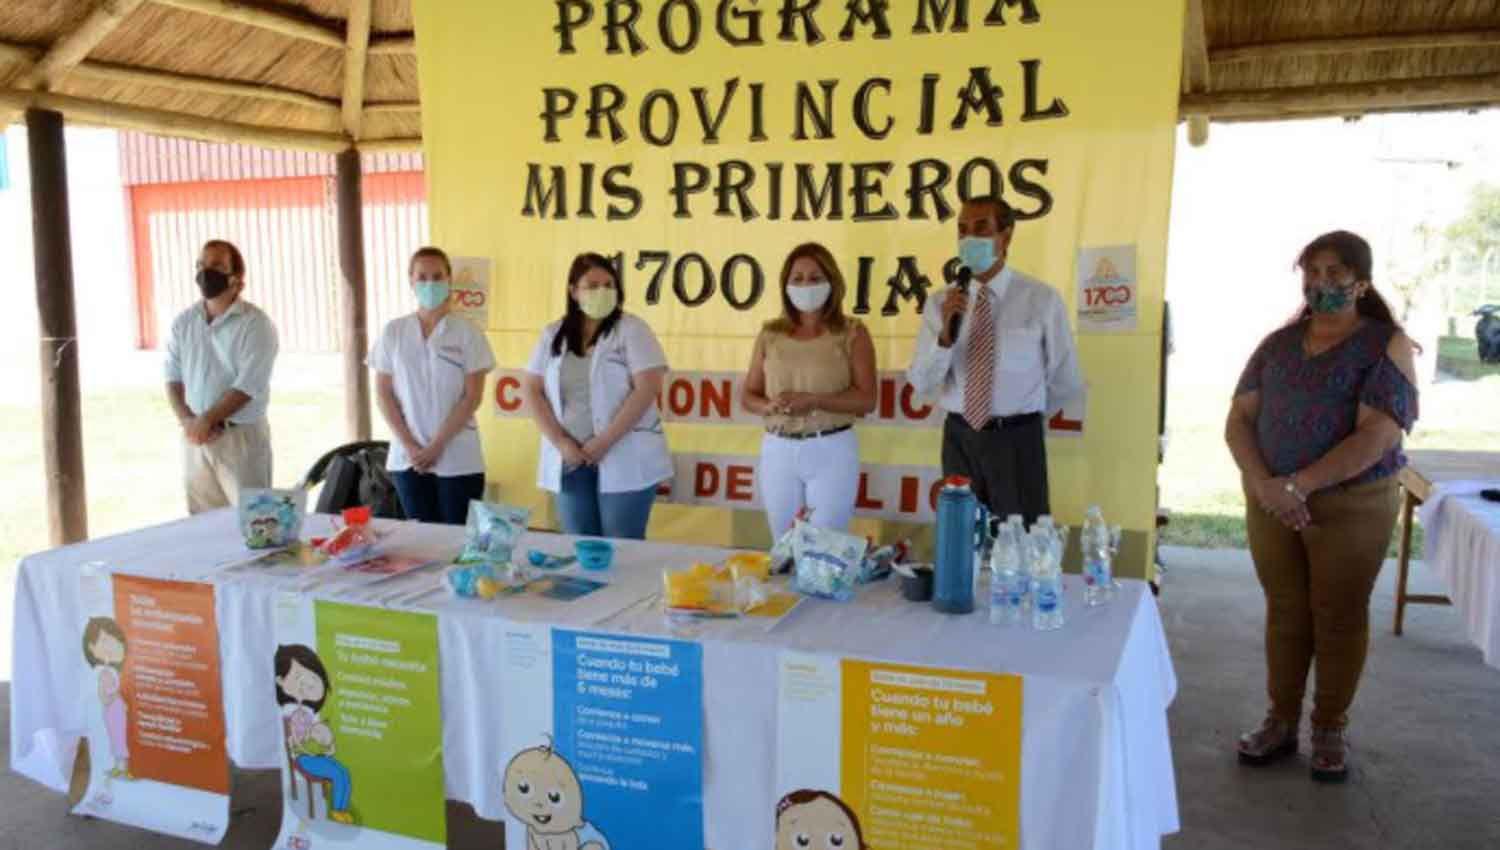 Programa ldquoMis Primeros 1700 diacuteasrdquo en Sol de Julio